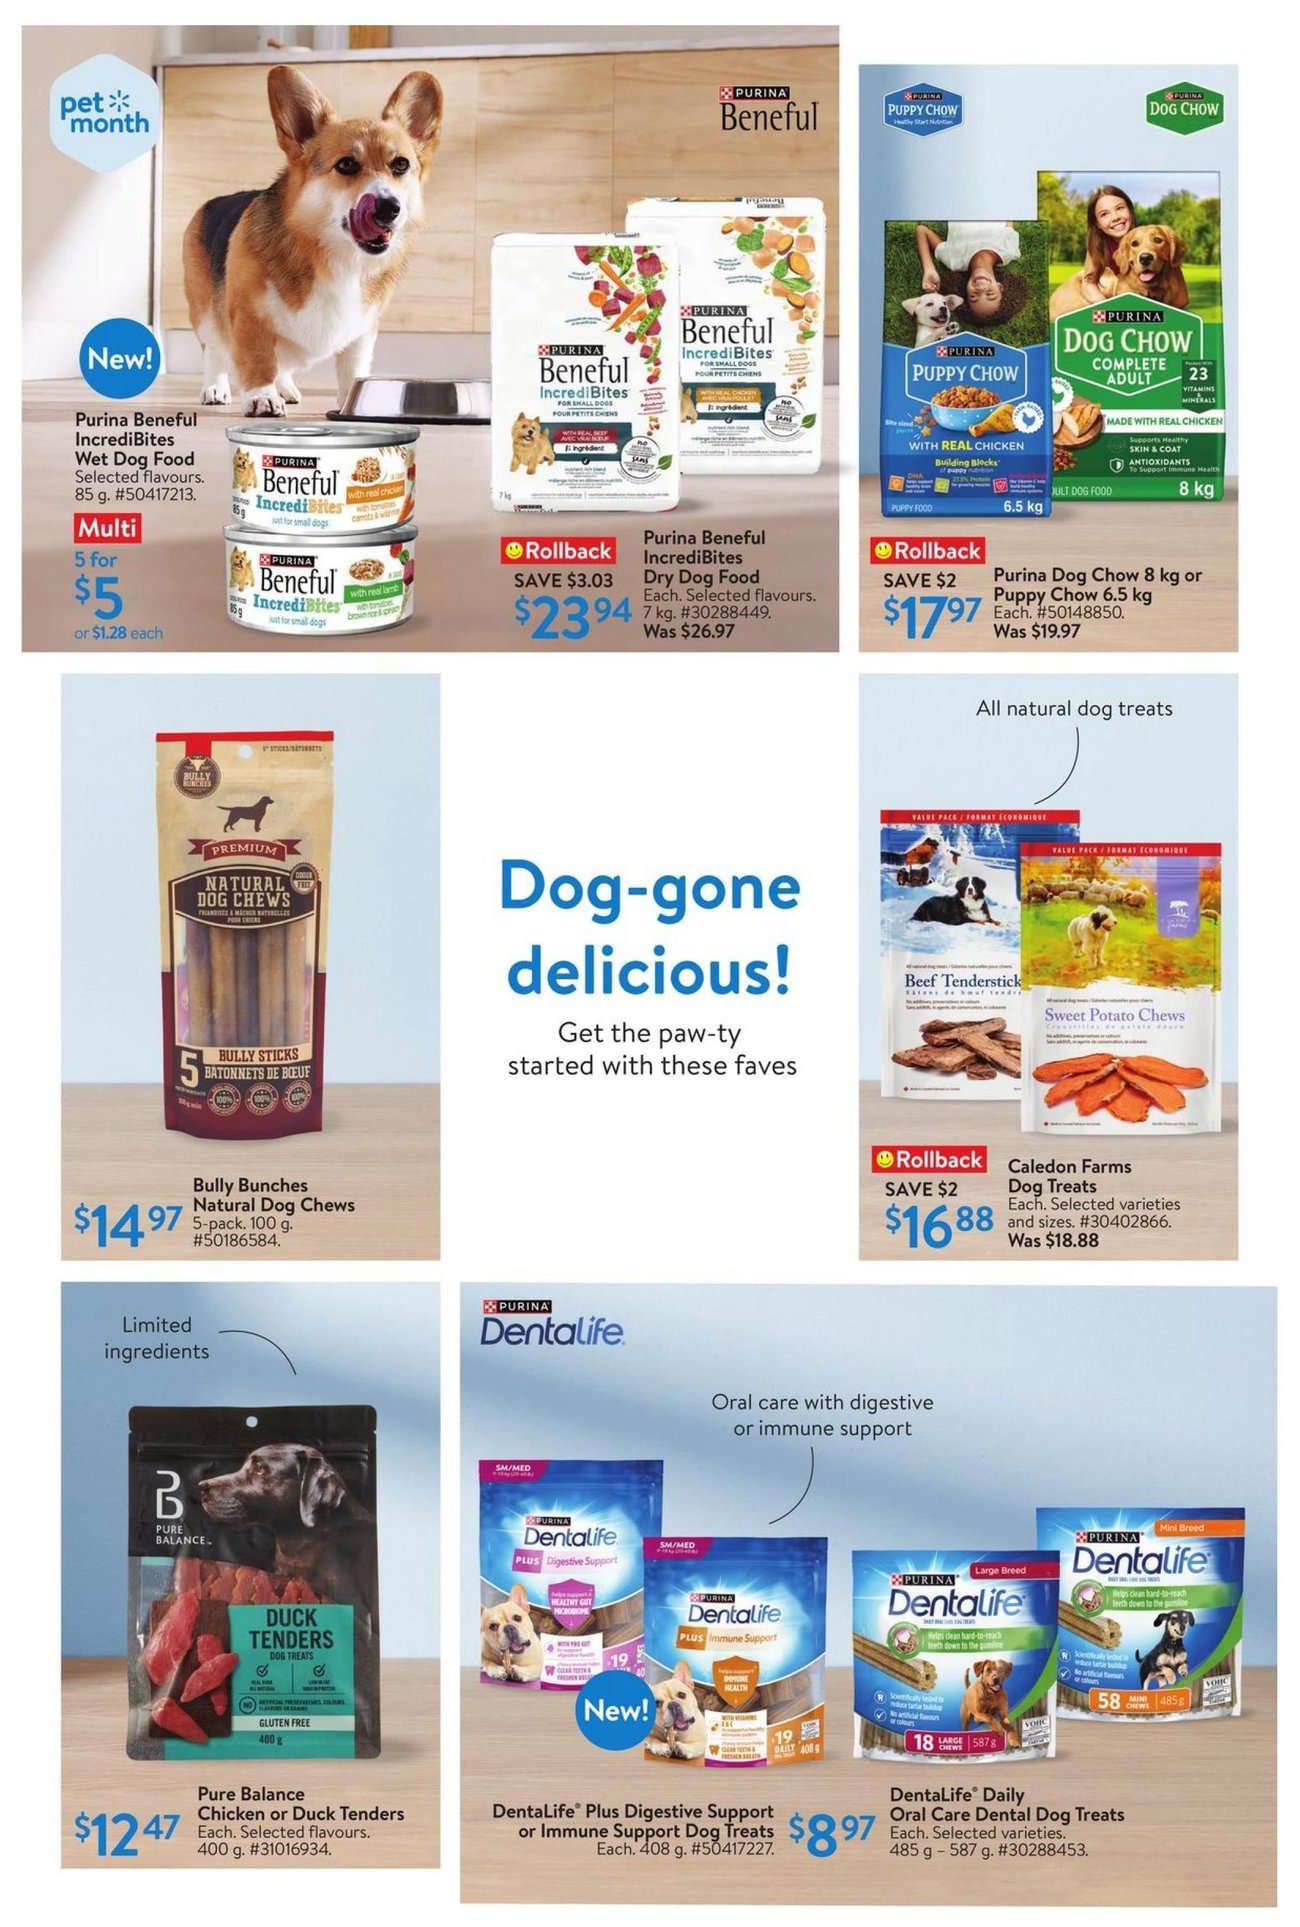 Walmart Canada - Pet Month Specials - Page 7